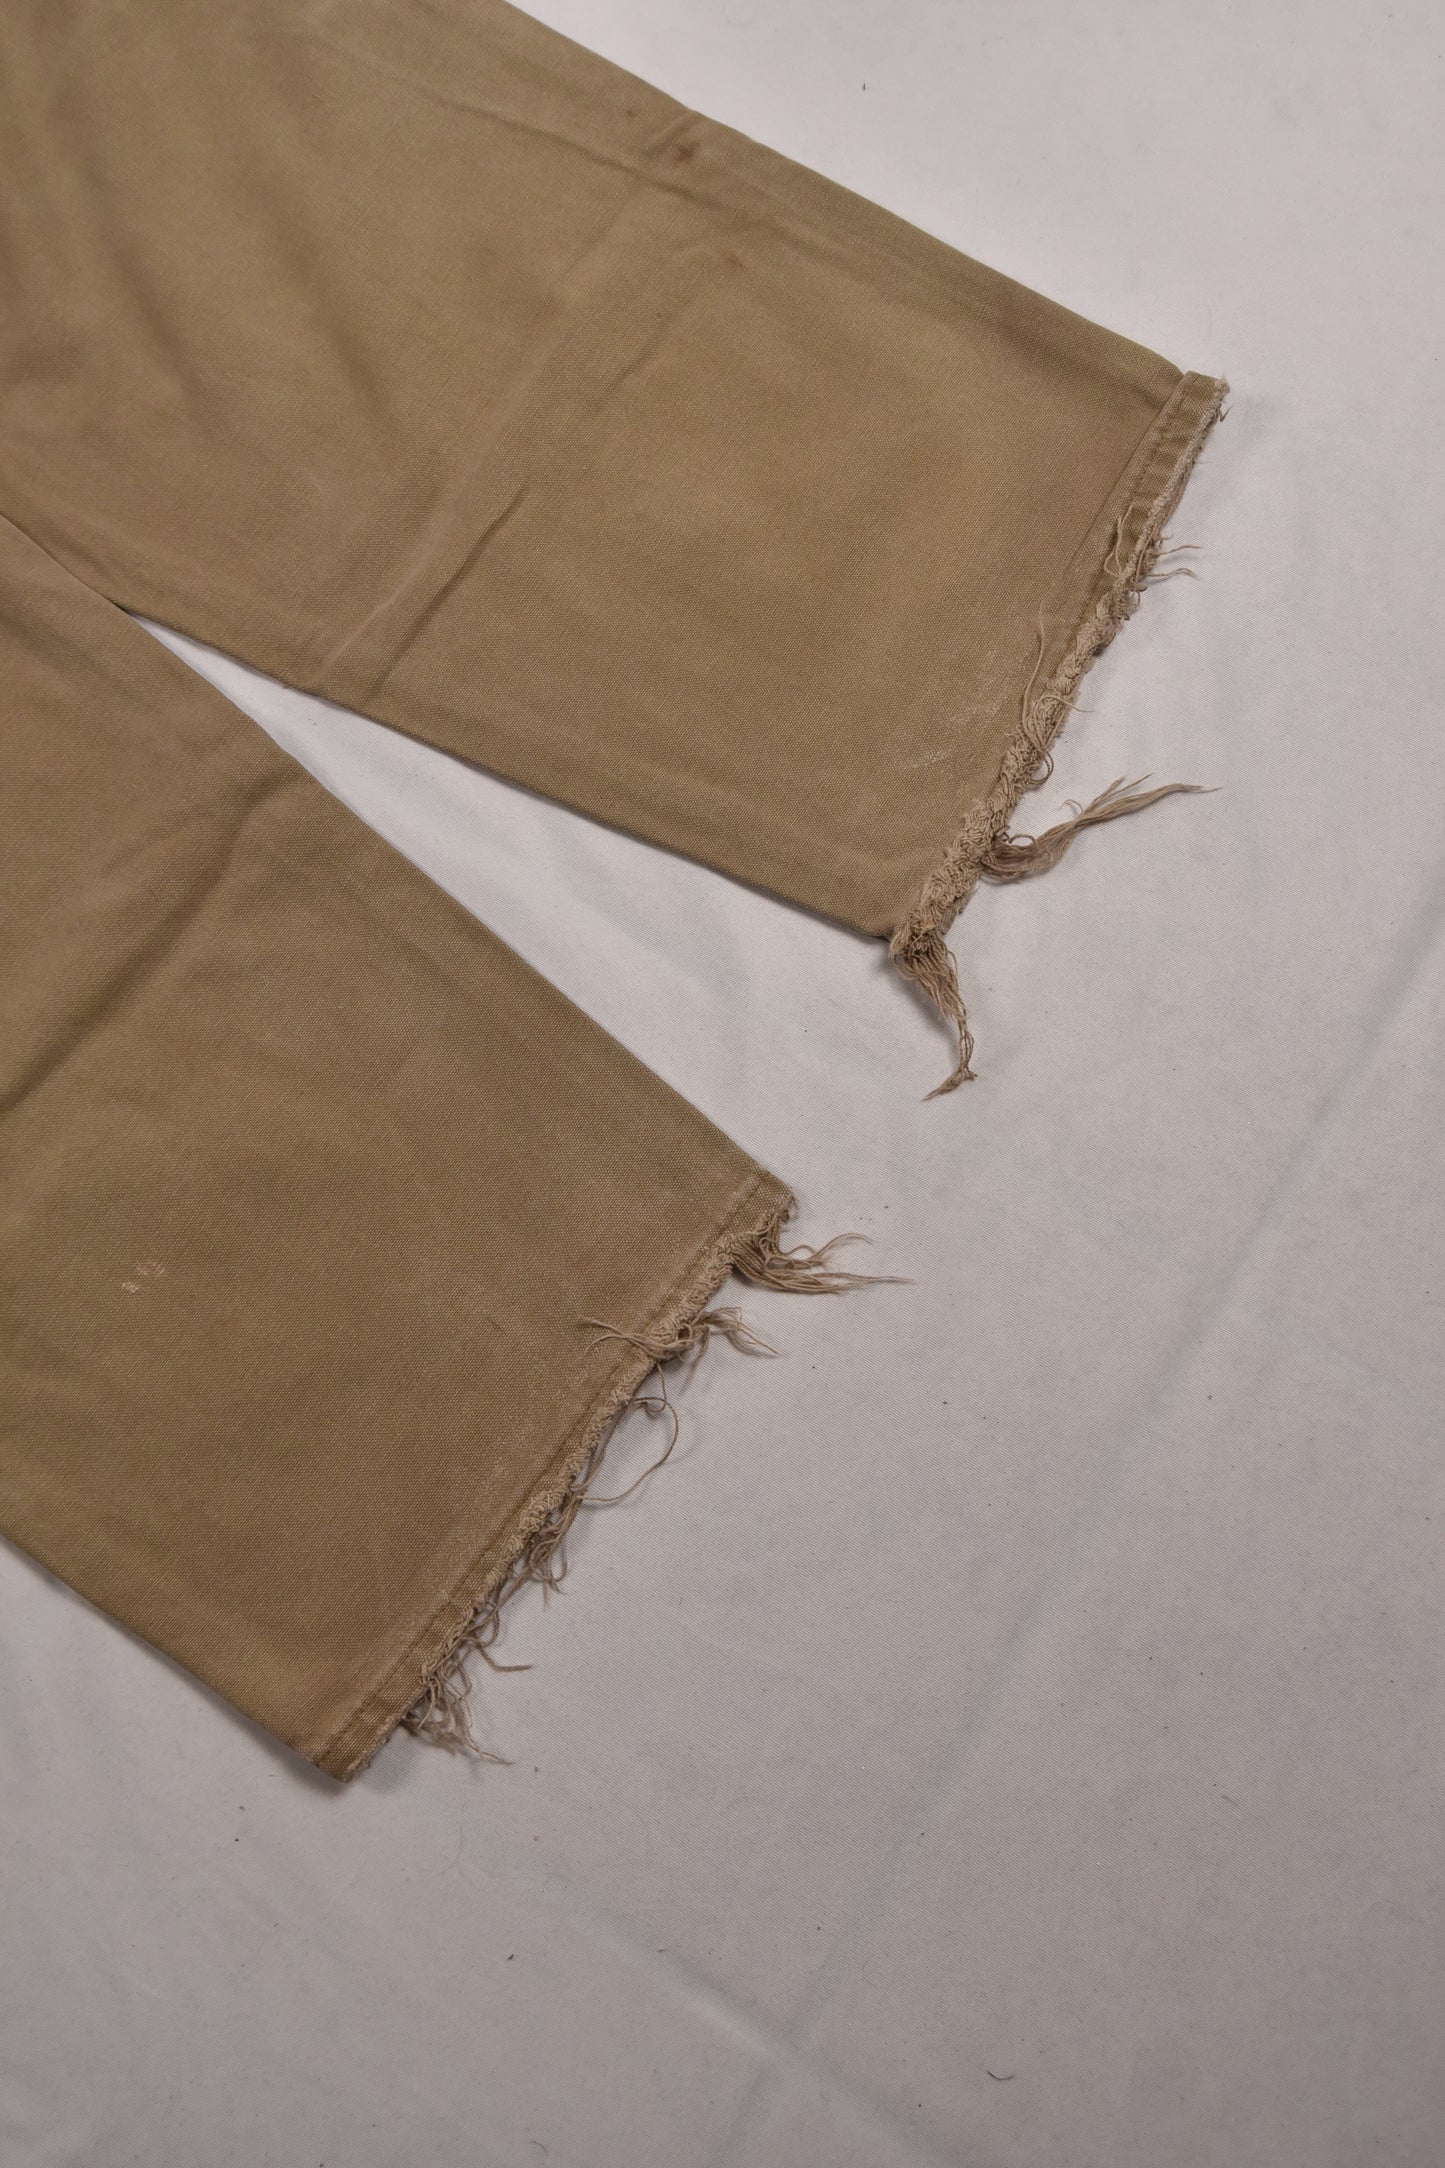 Pantaloni da lavoro Carhartt Vintage / 46x30